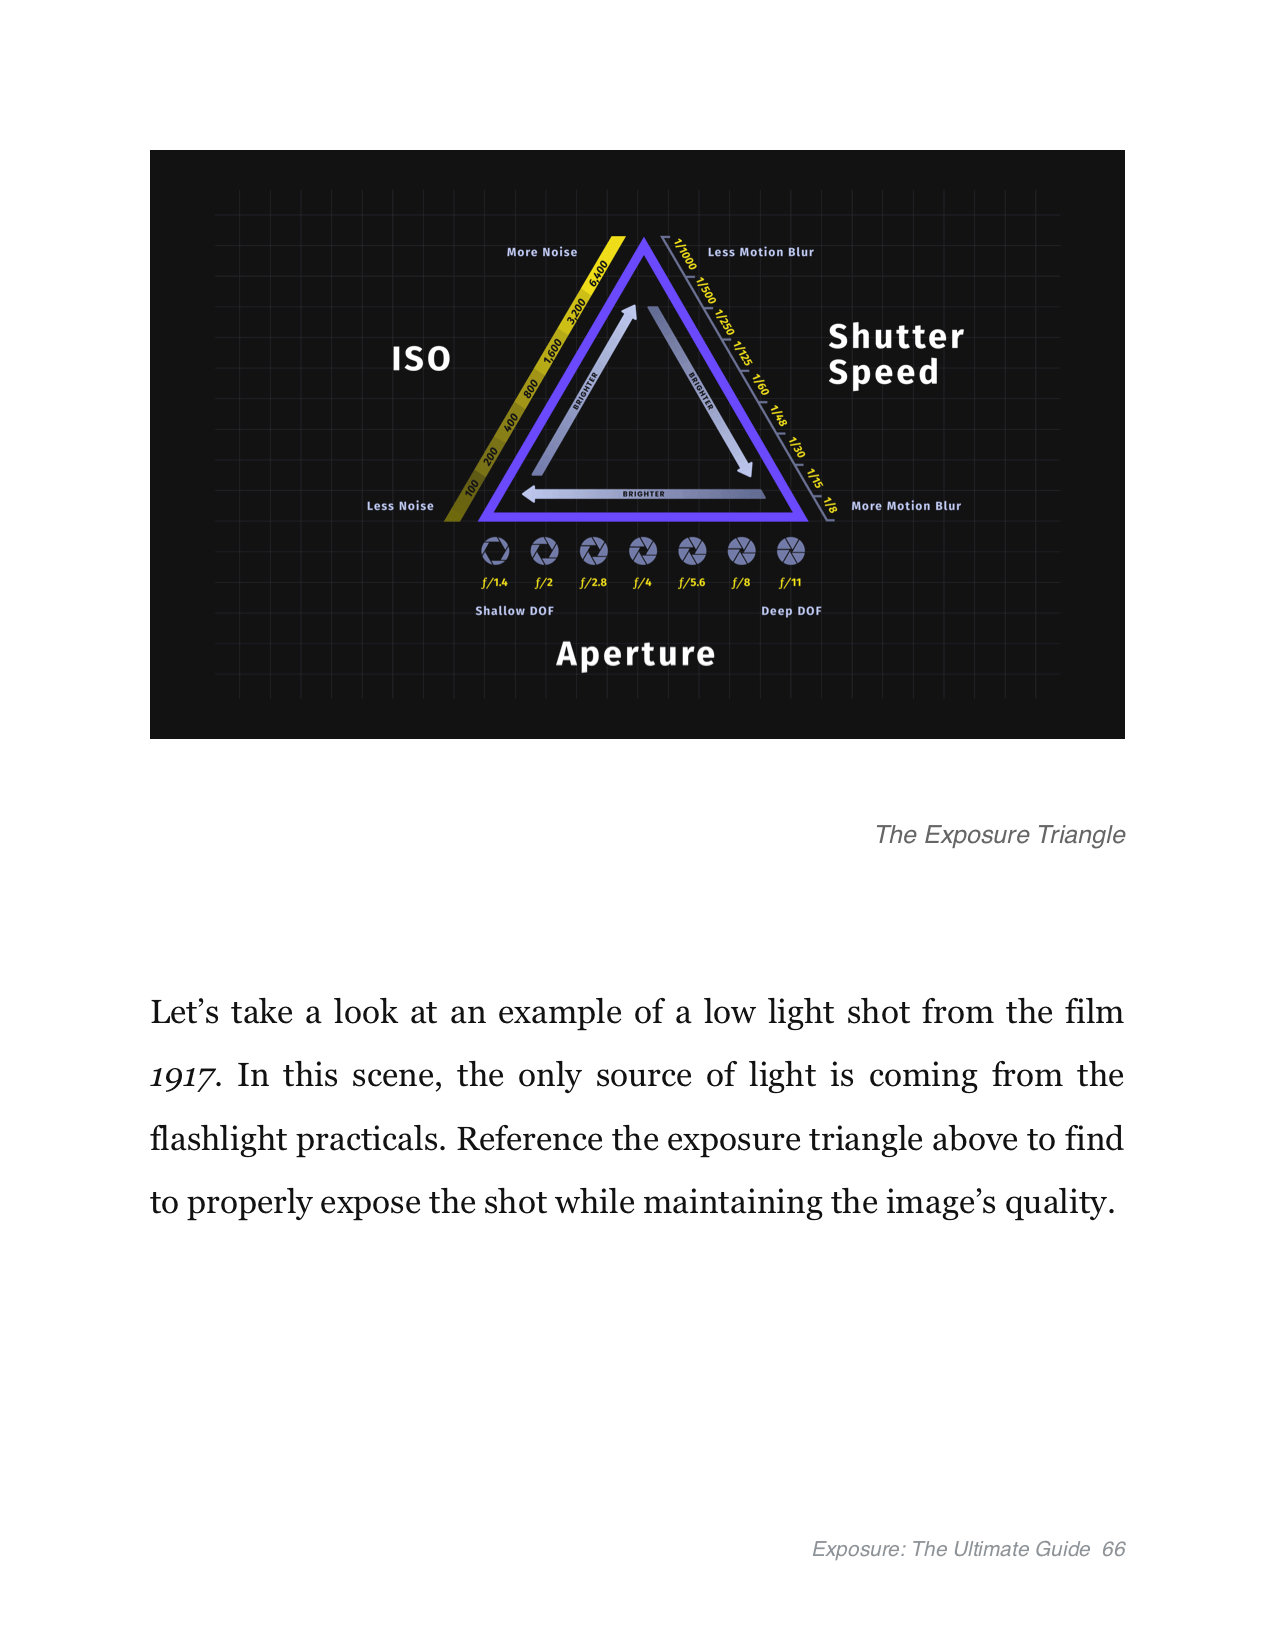 Exposure Triangle Ebook - The Ultimate Guide - Exposure Triangle